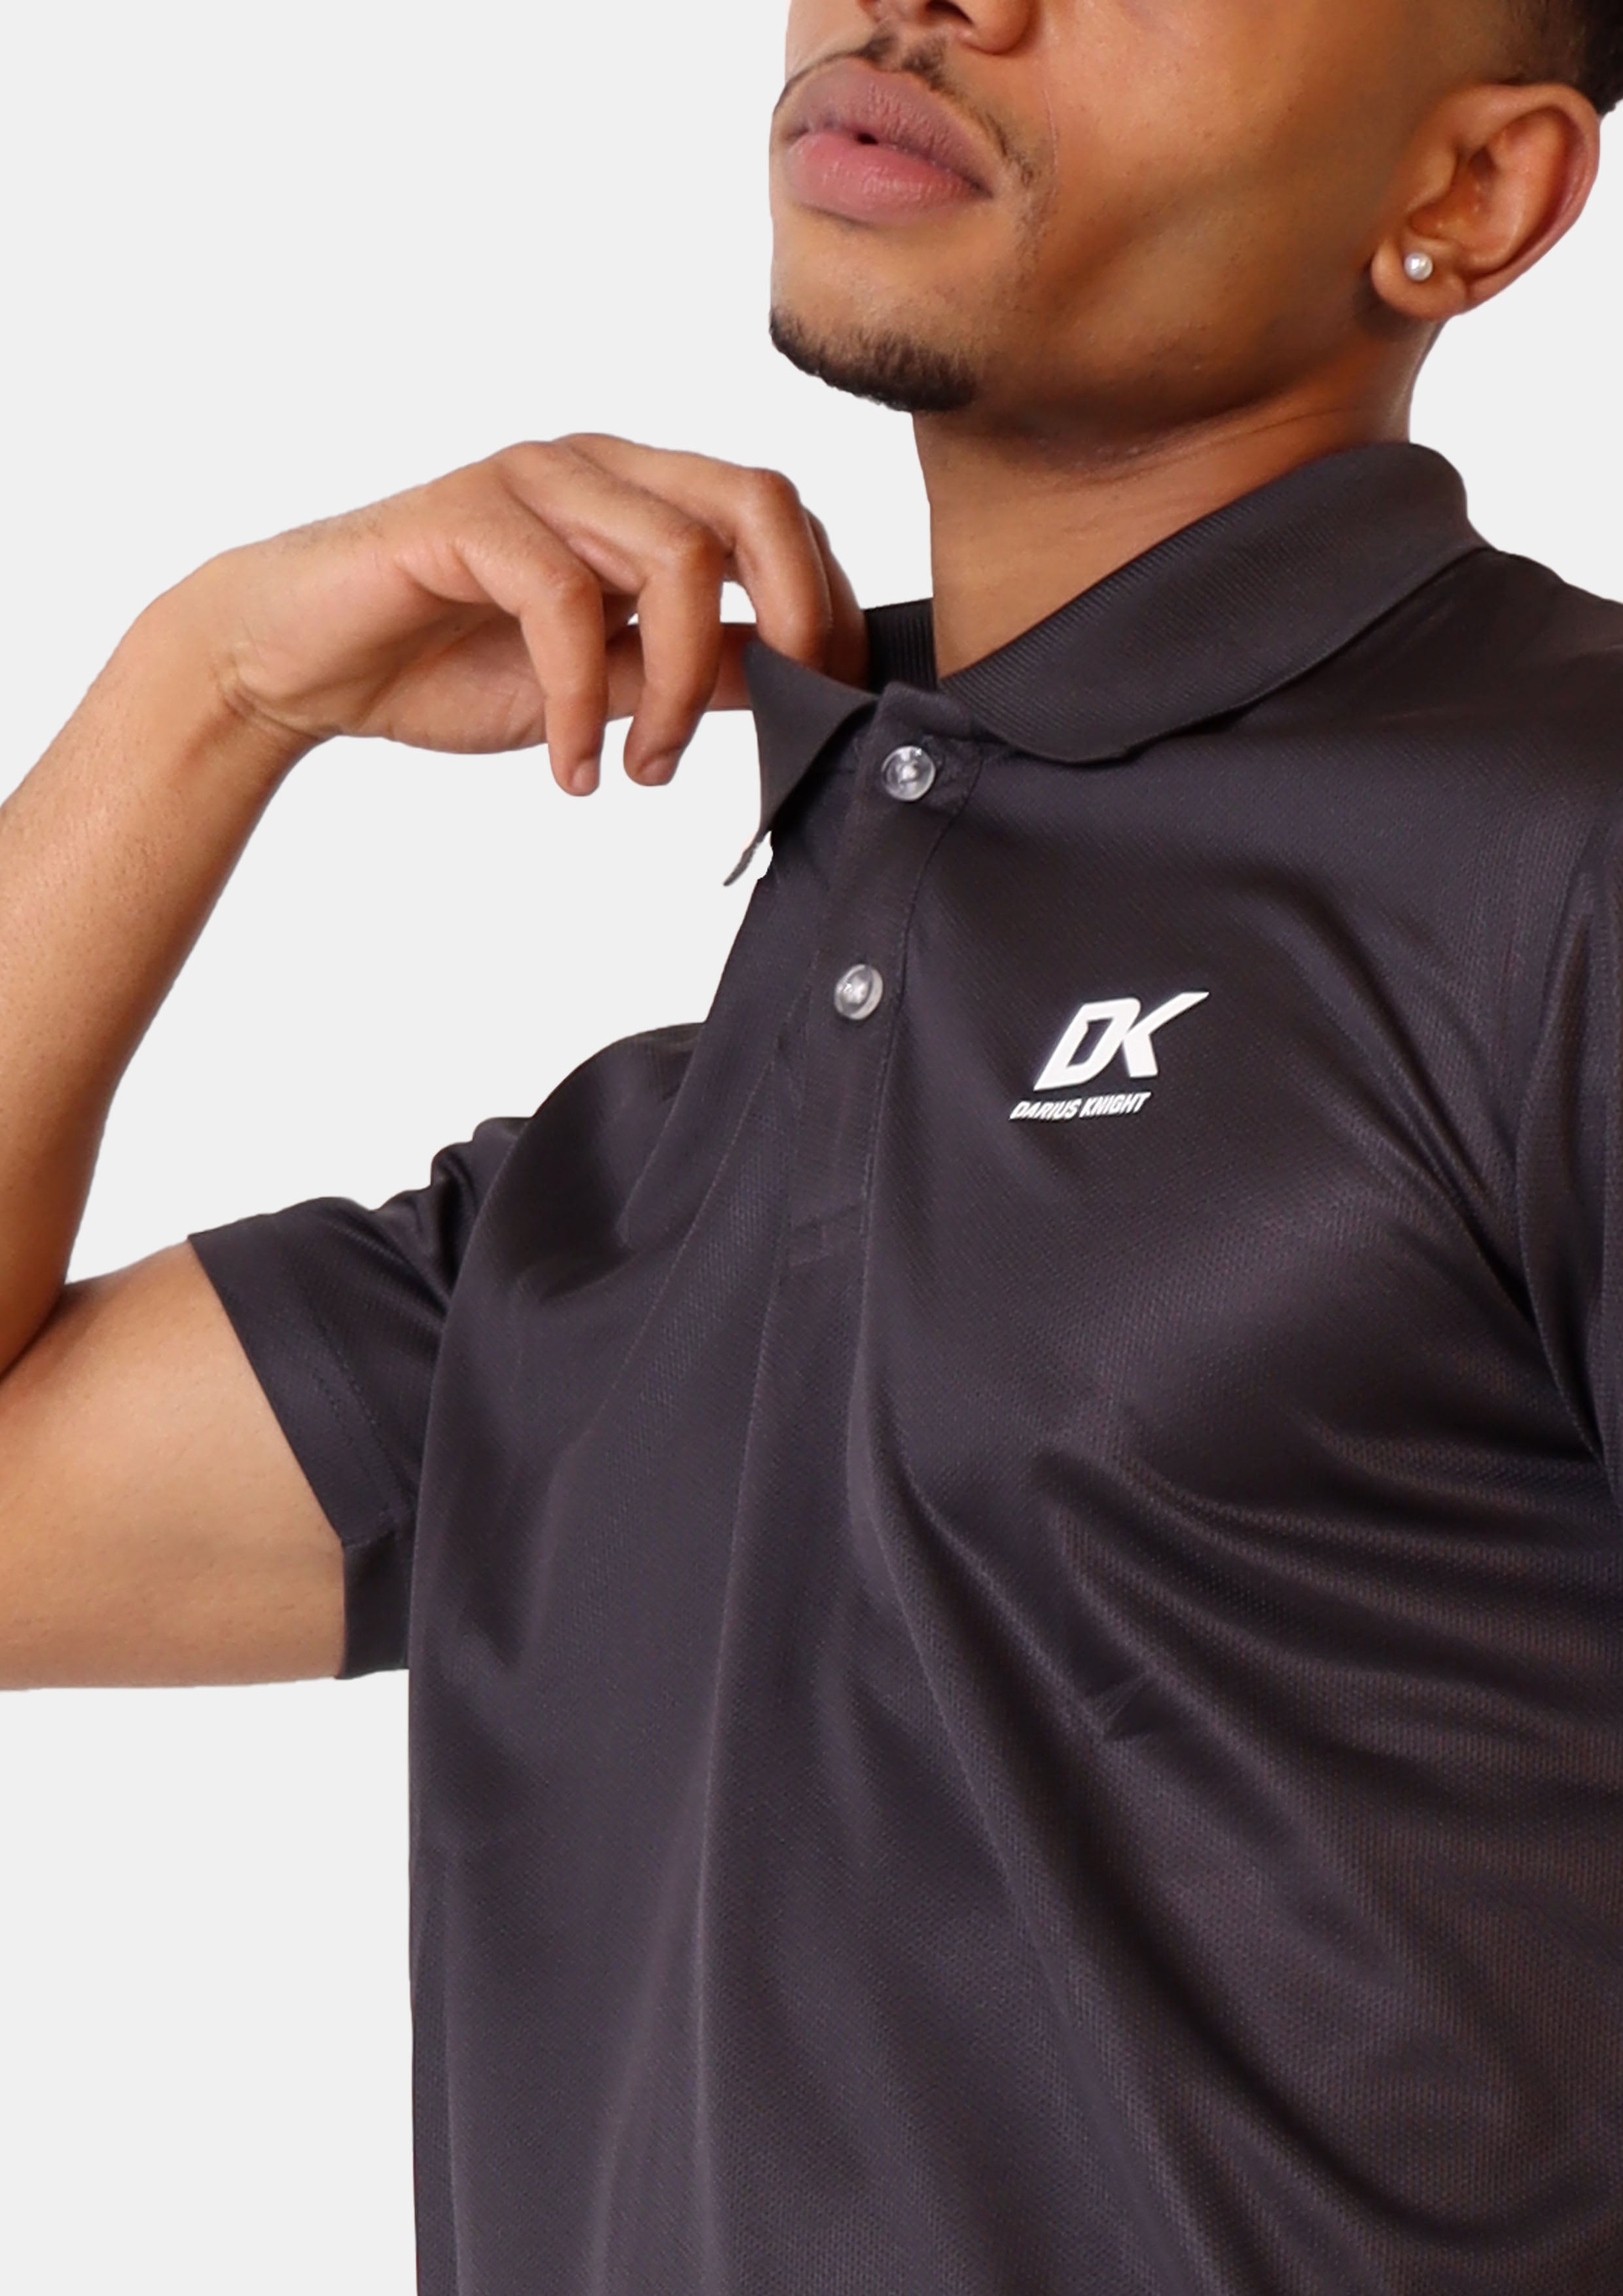 DK Polo Shirt (Dark Grey) - DK Sports